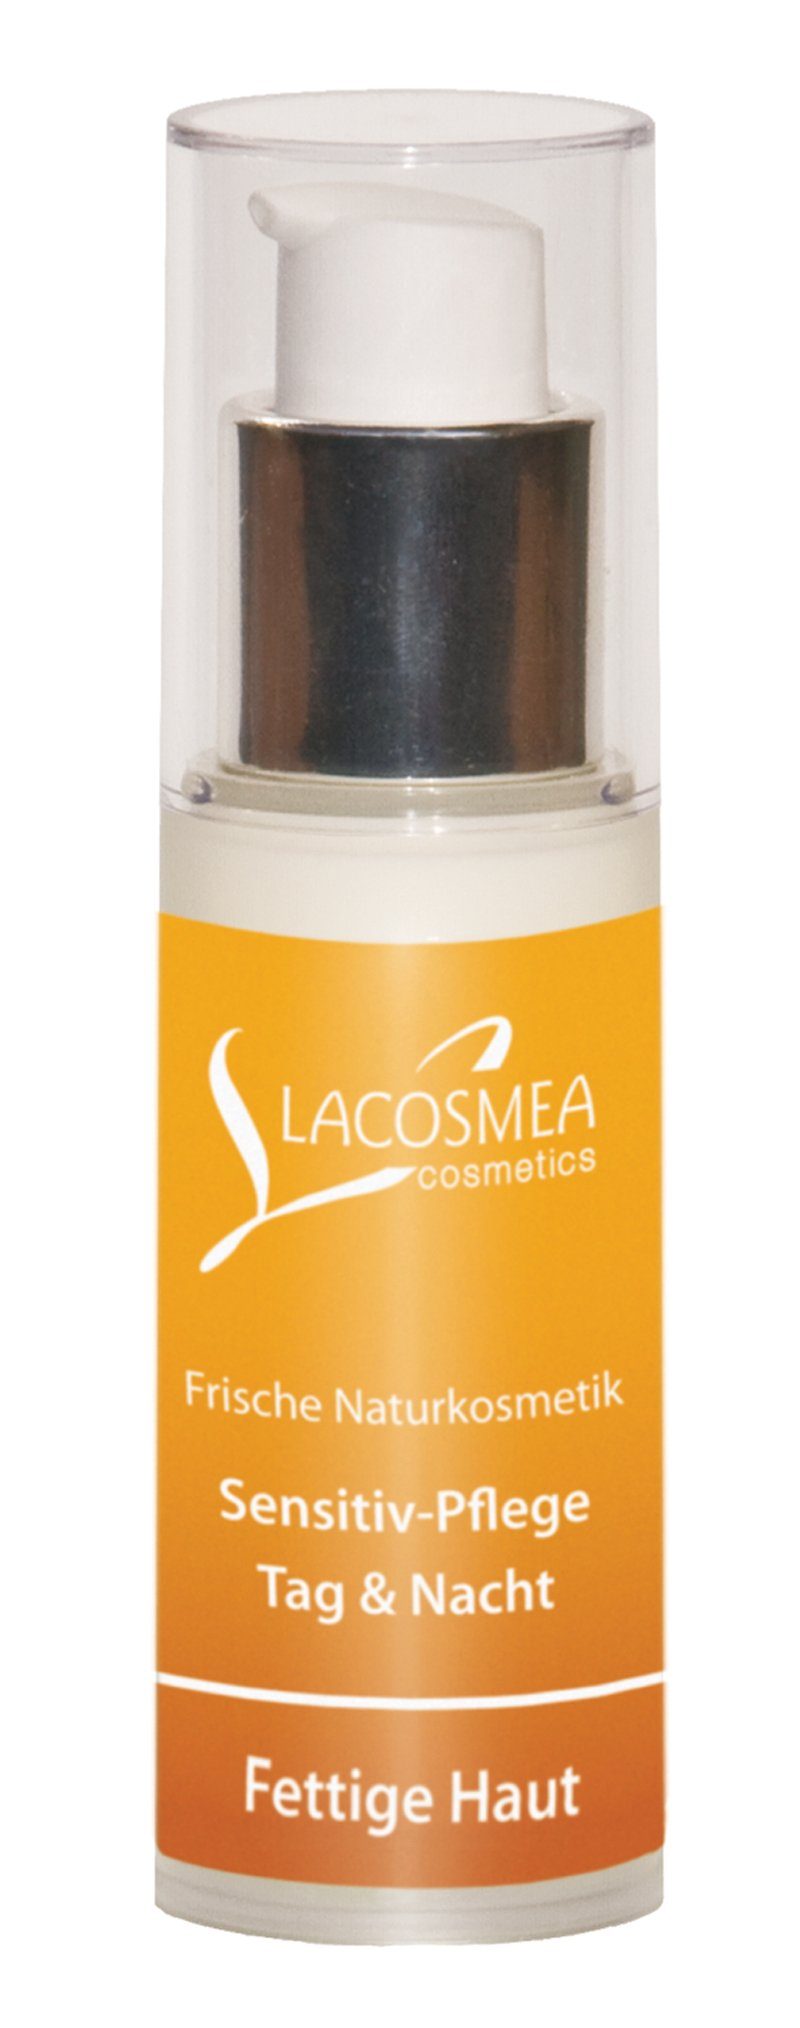 für Cosmetics Gesichtspflege Sensitivpflege Haut fettige Lacosmea